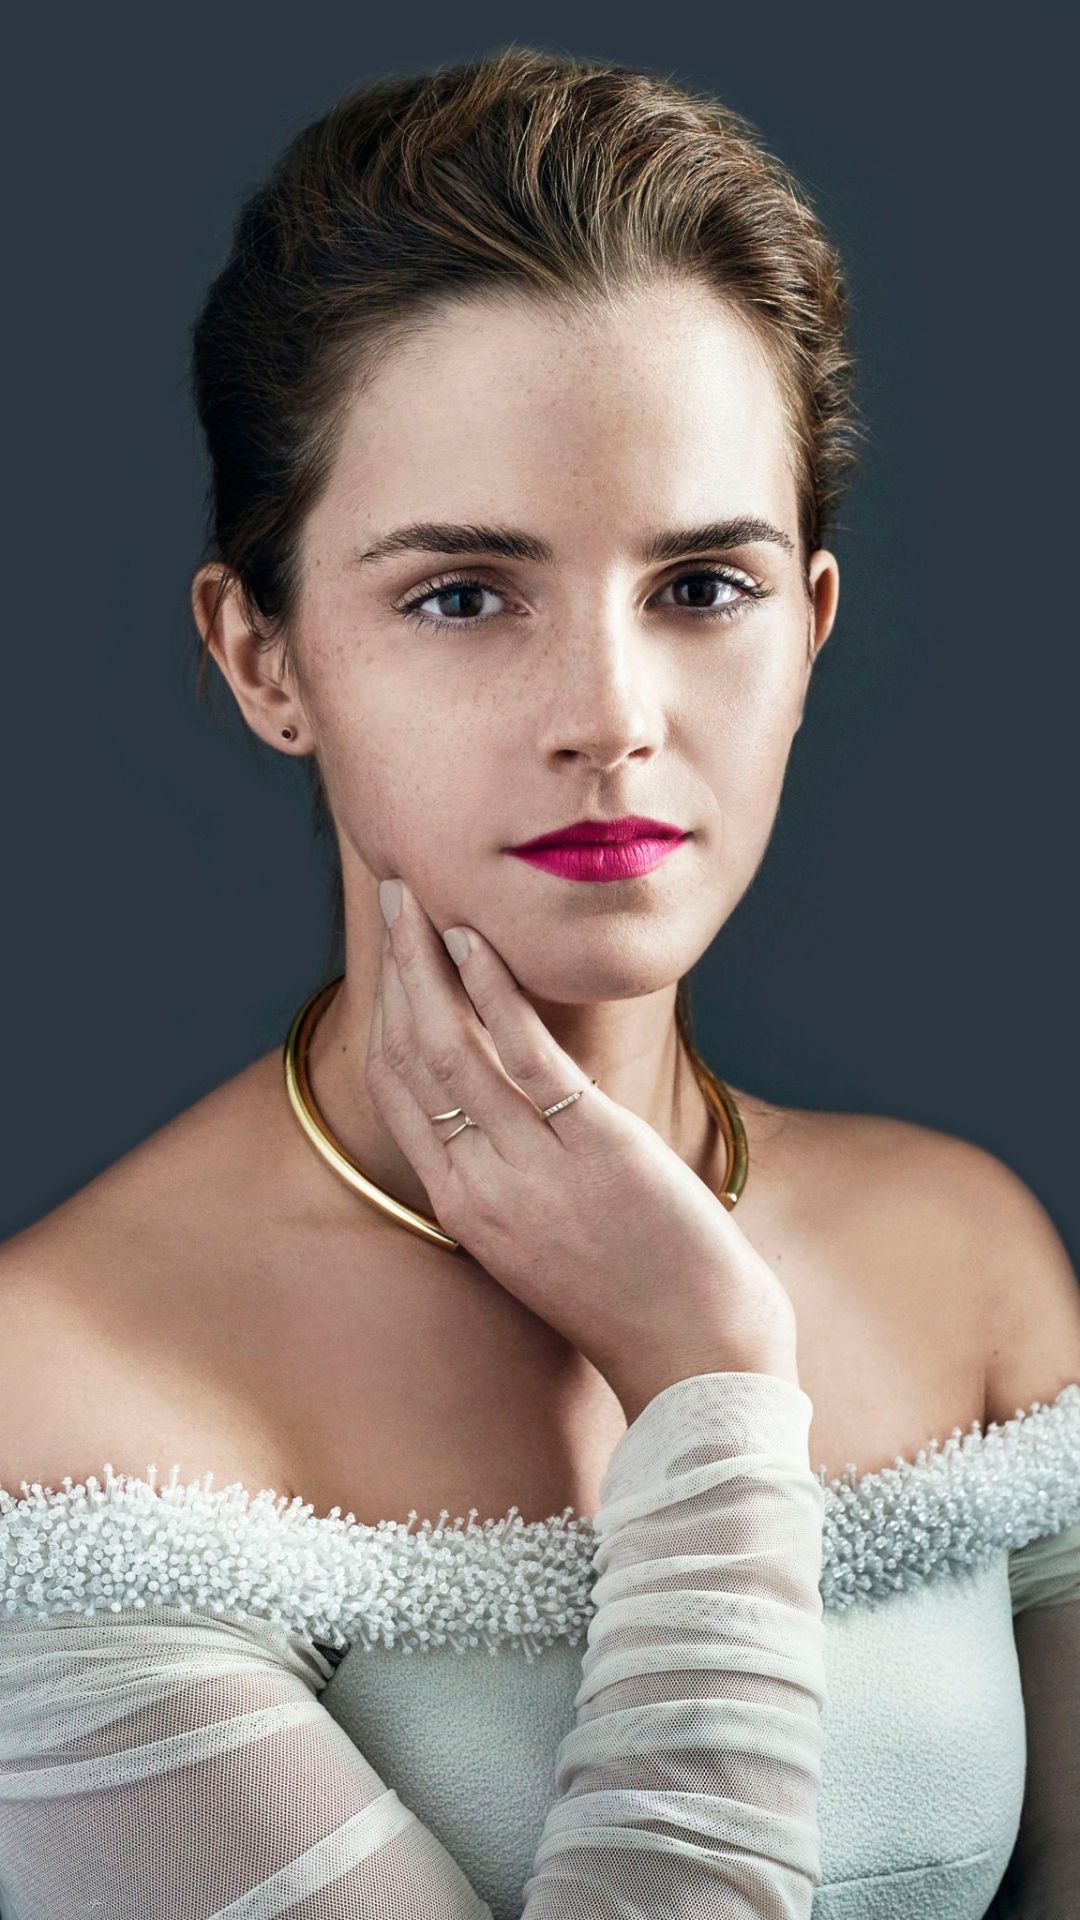 Emma Watson Desktop Wallpapers, HD Emma Watson Backgrounds, Free Images  Download